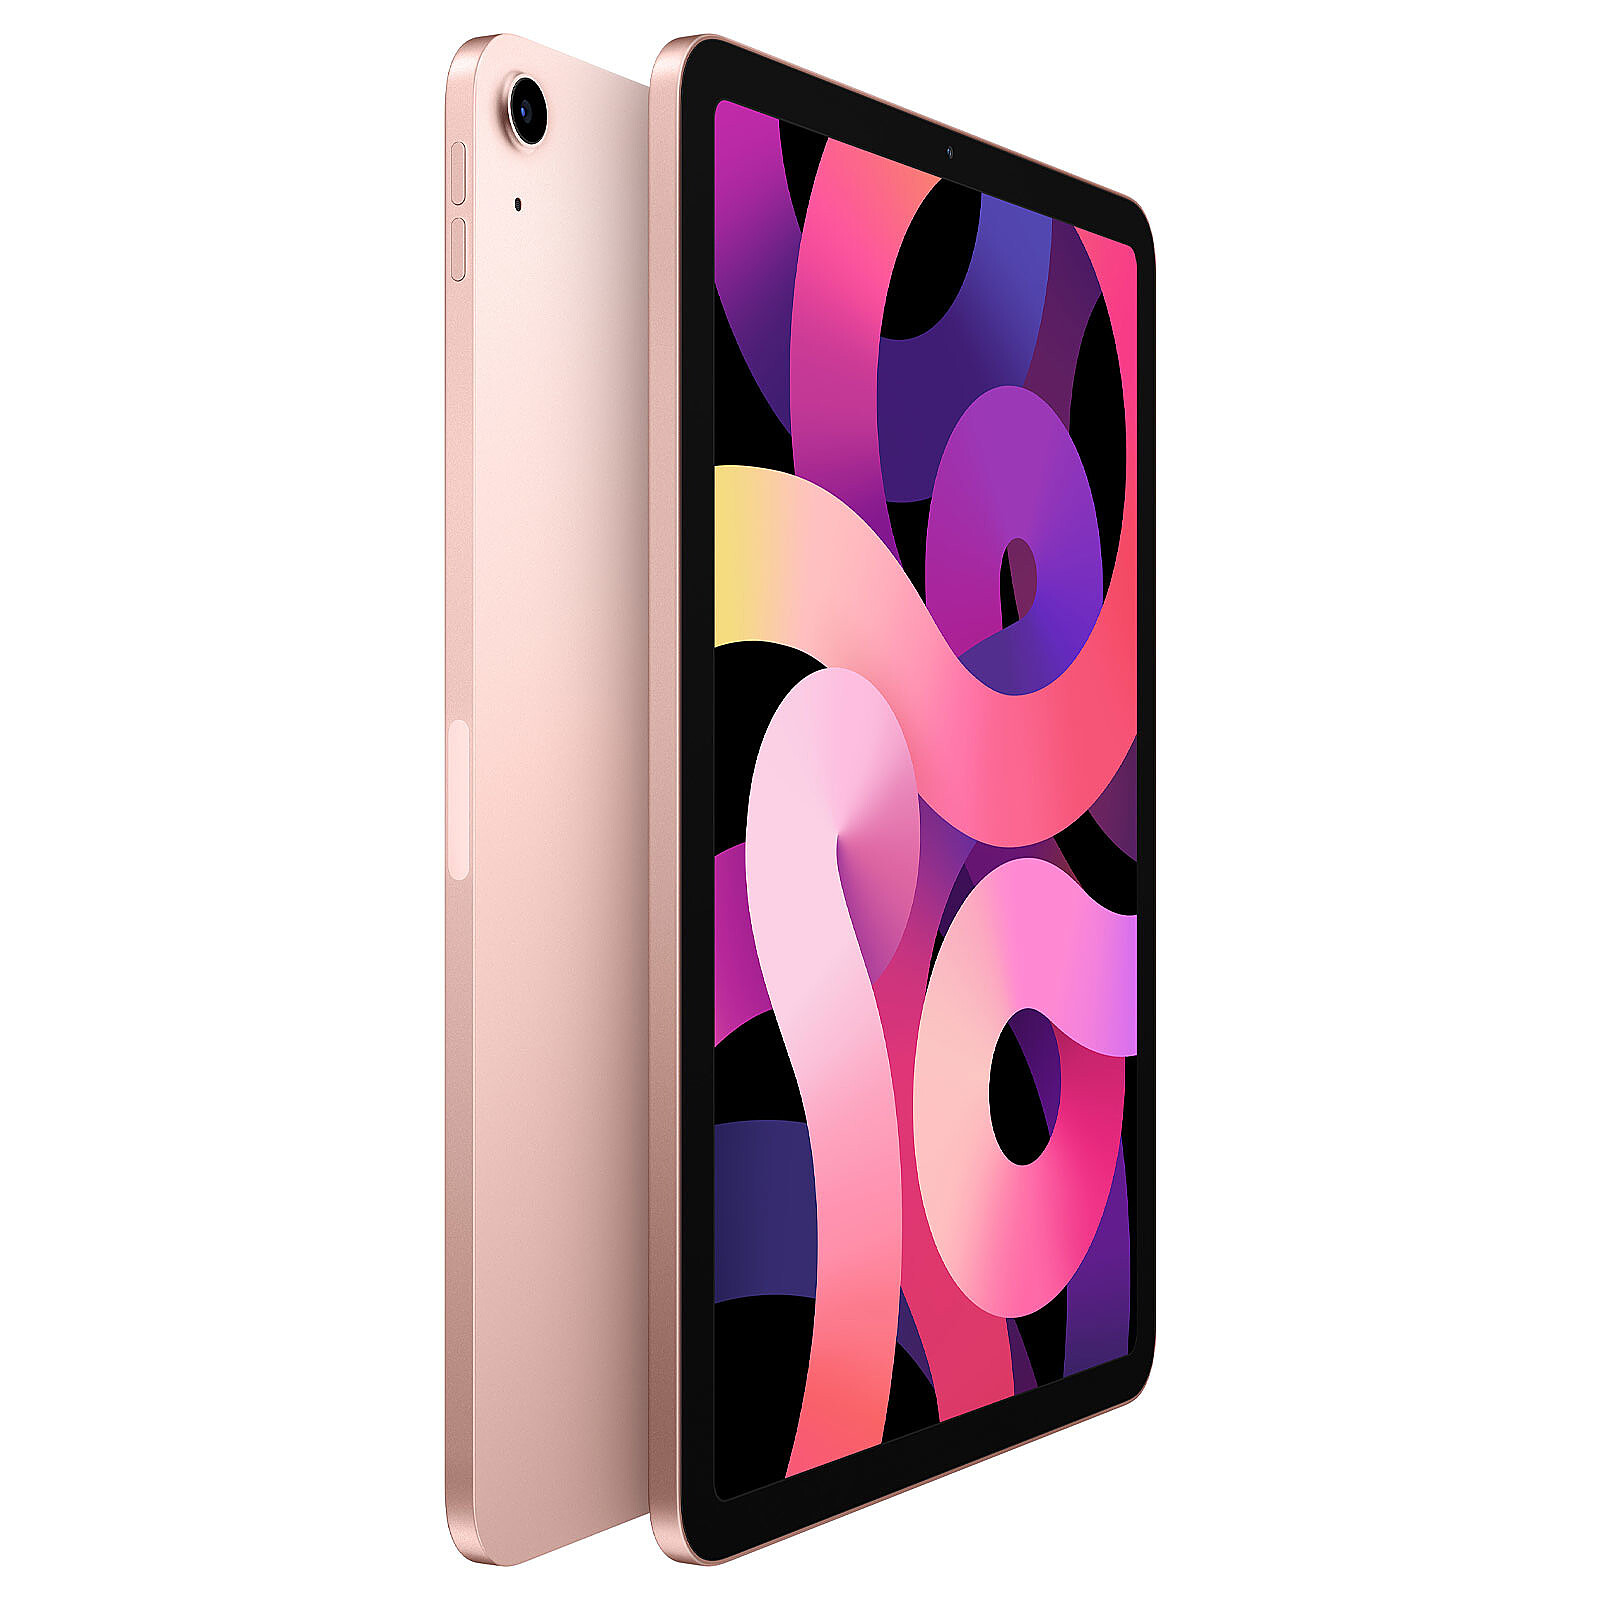 Apple iPad Air (2020) Wi-Fi 64 GB Rose Gold